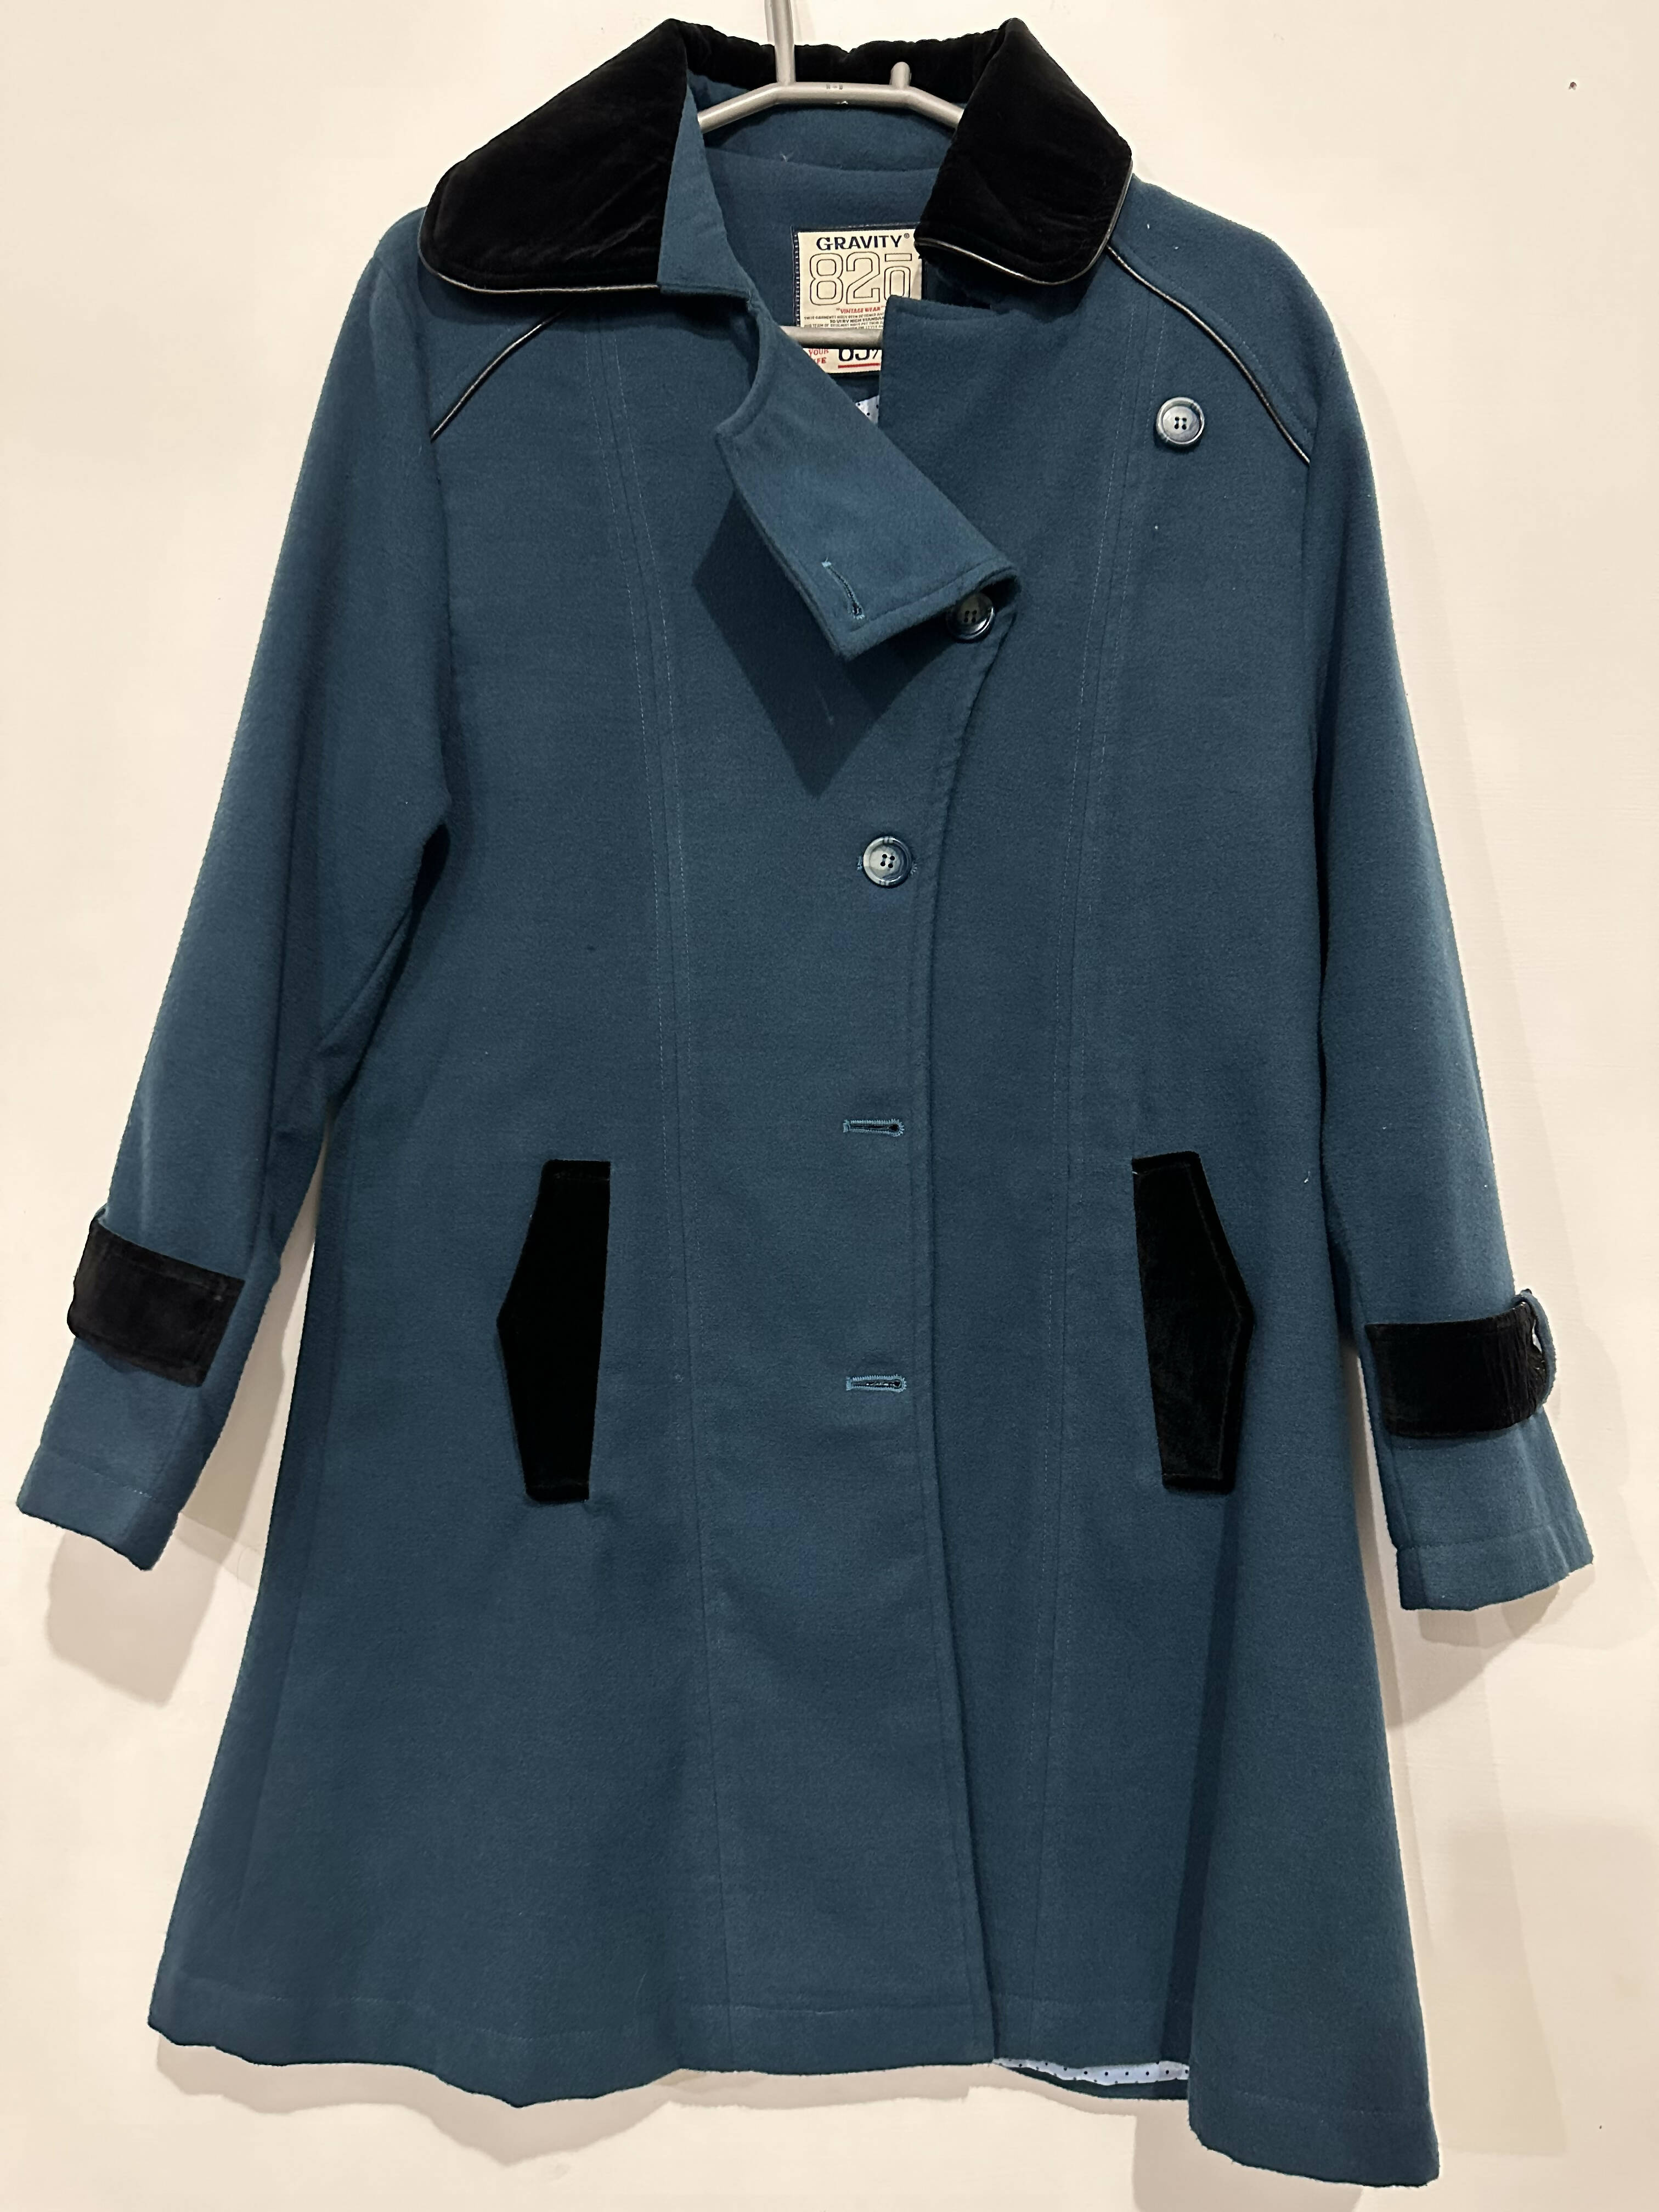 Imported Long coat| Blue colour| Women Jackets | Size Medium | New